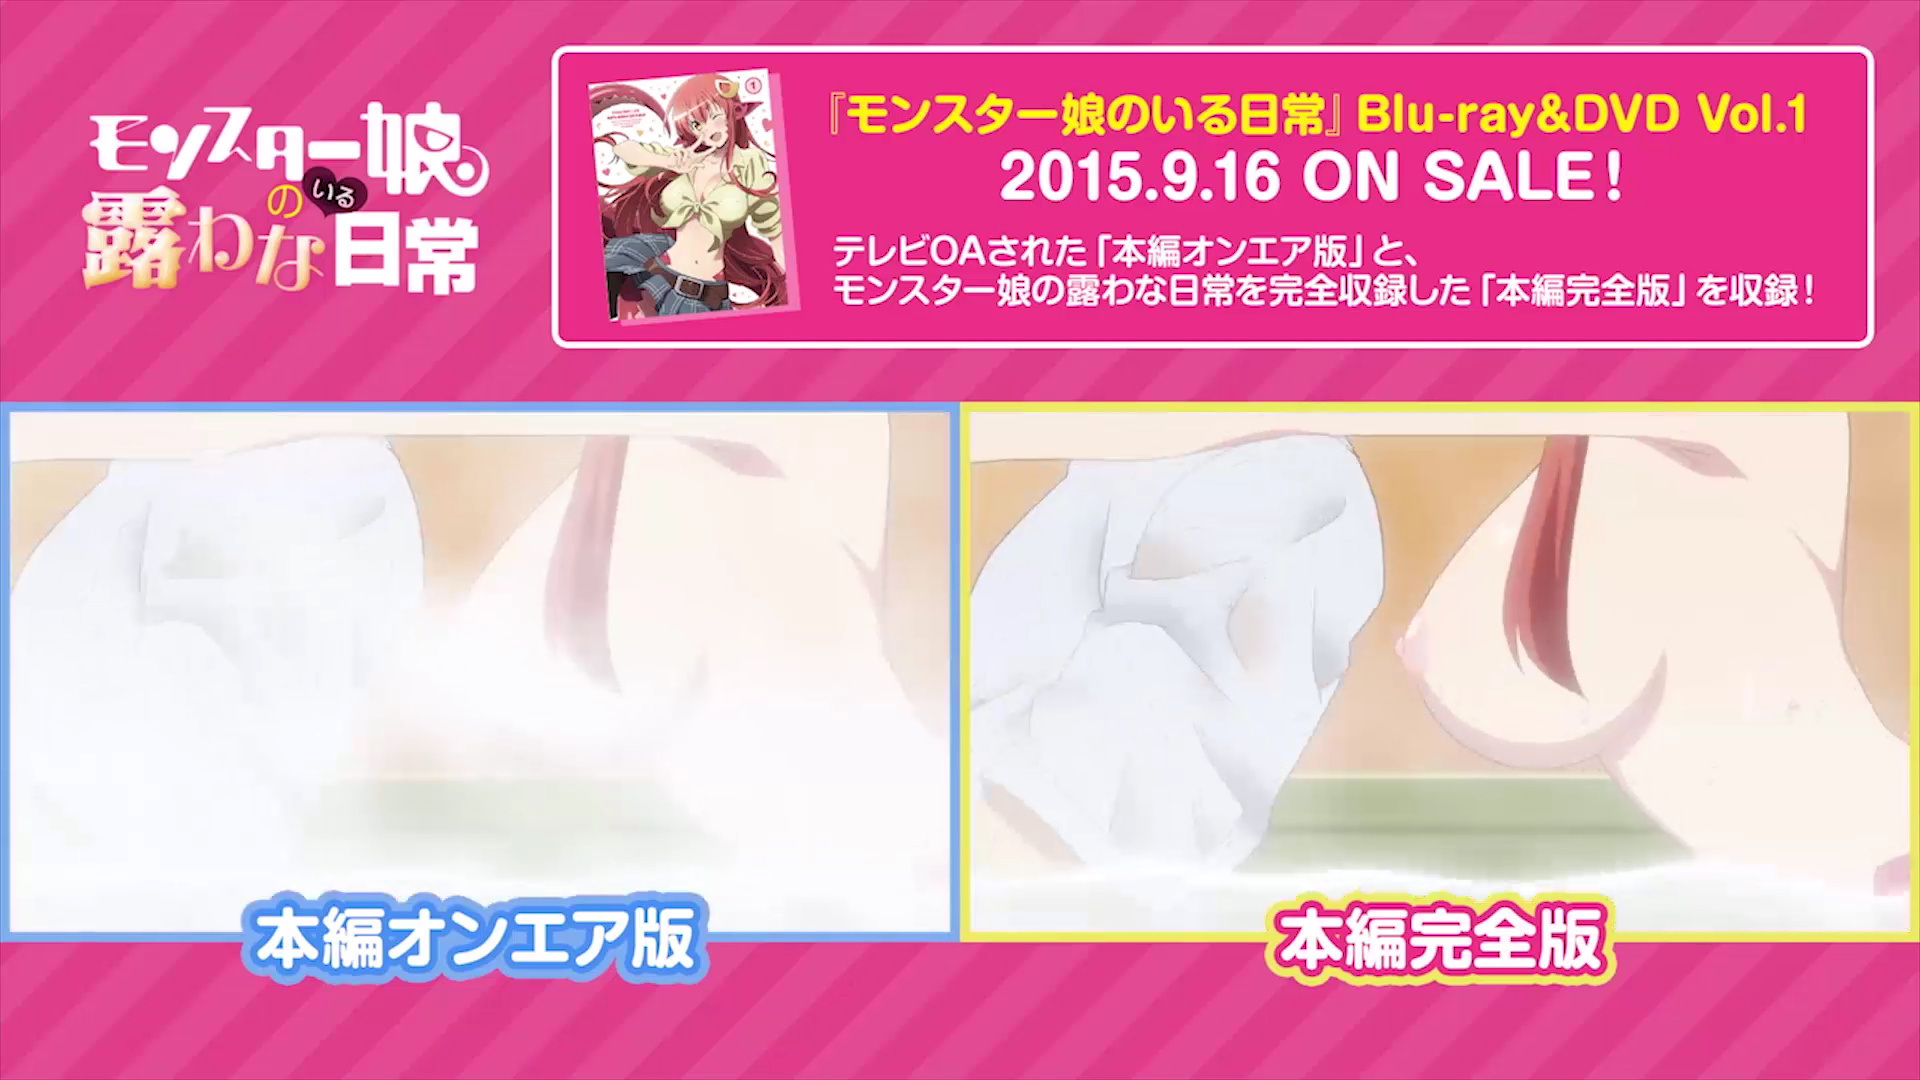 TV vs Blu-Ray Monster Musume anime blu-ray volume 1 uncensored 2